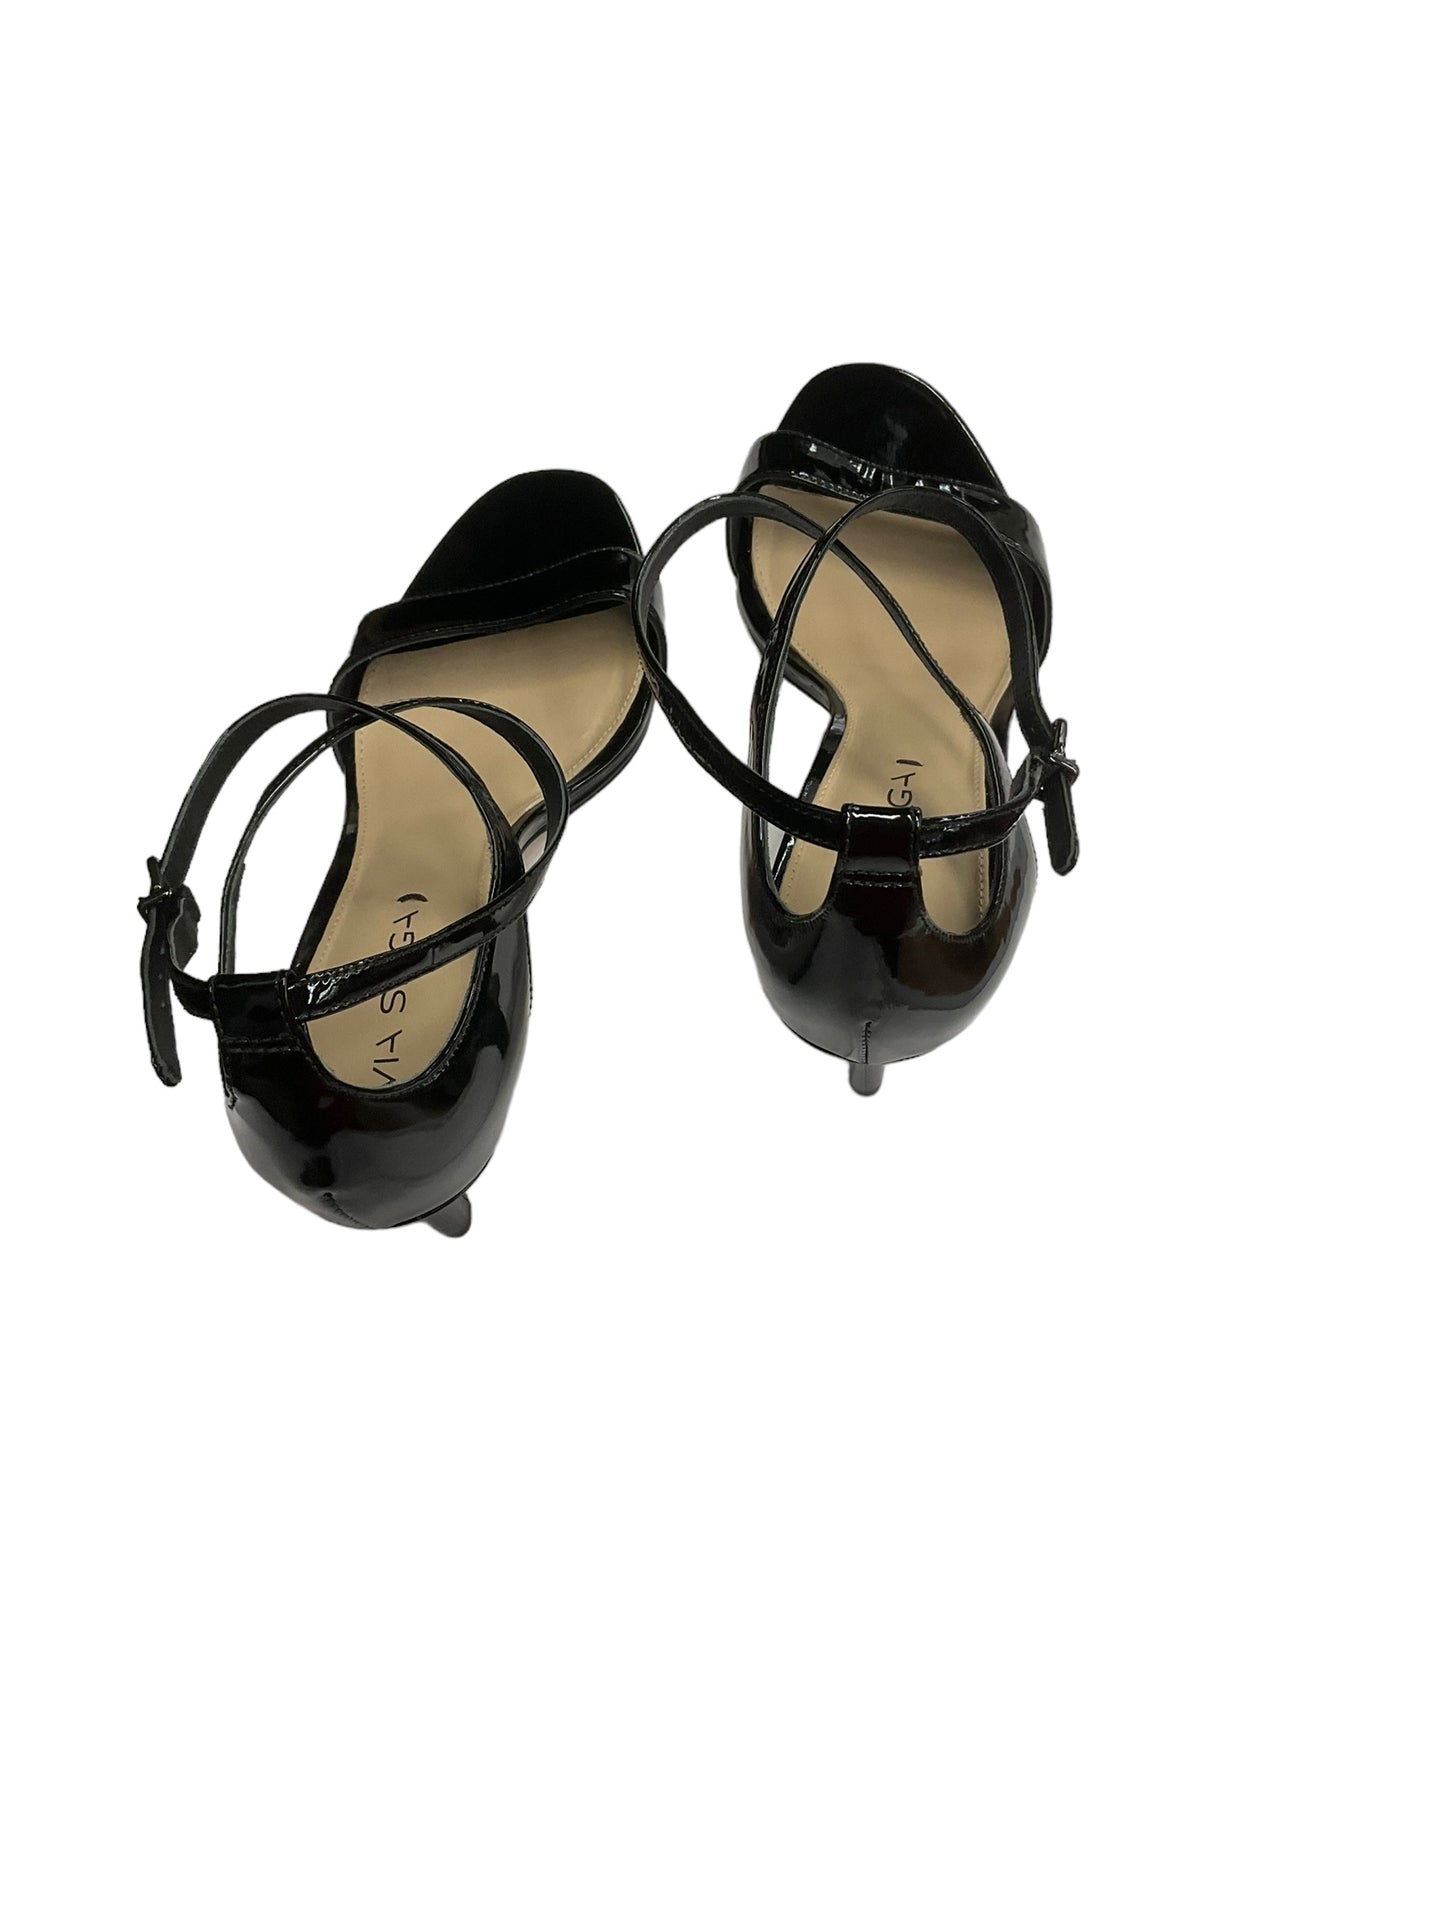 Shoes Heels Stiletto By Via Spiga  Size: 10